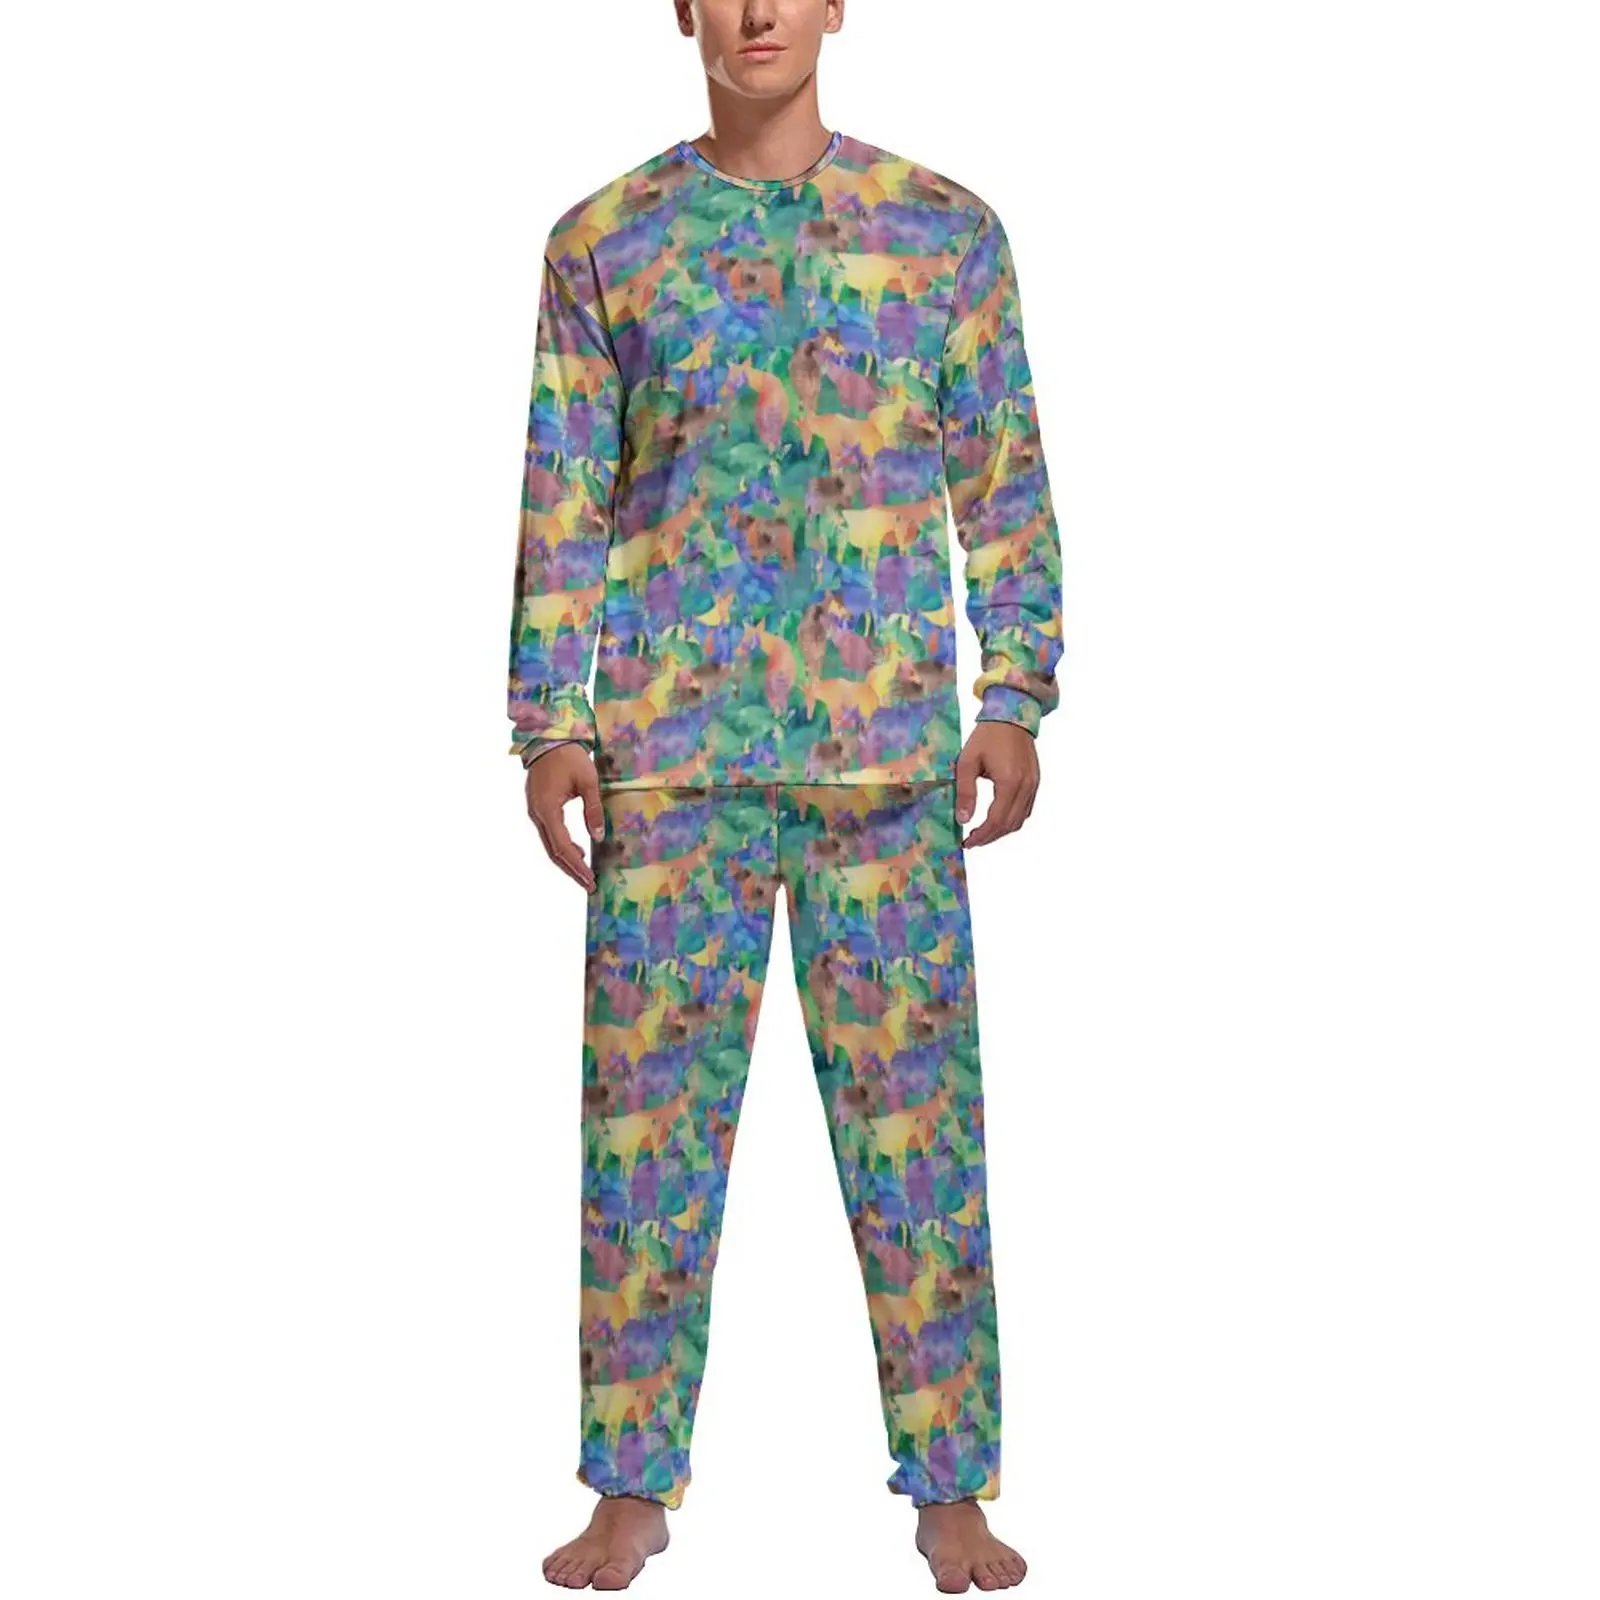 Colorful Forest Print Pajamas Daily Abstract Animal Casual Sleepwear Men 2 Piece Graphic Long-Sleeve Romantic Pajamas Set